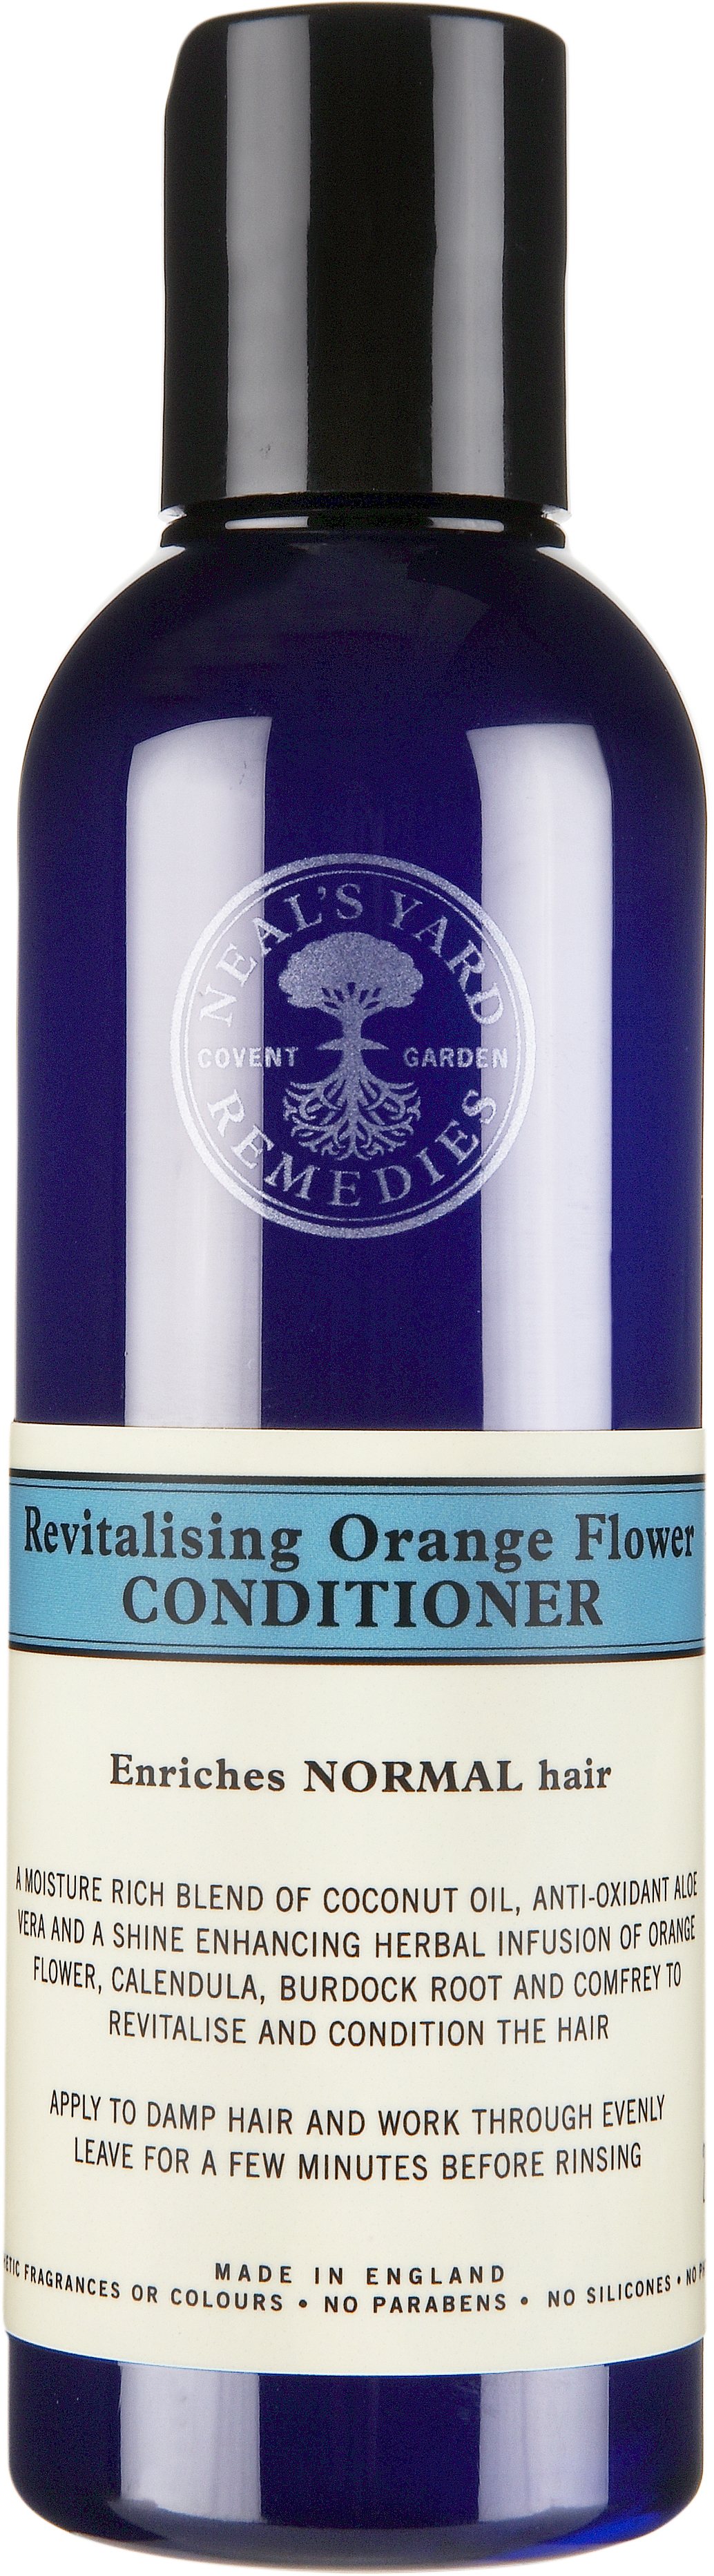 Neal’s Yard Remedies Revitalising Orange Flower Conditioner